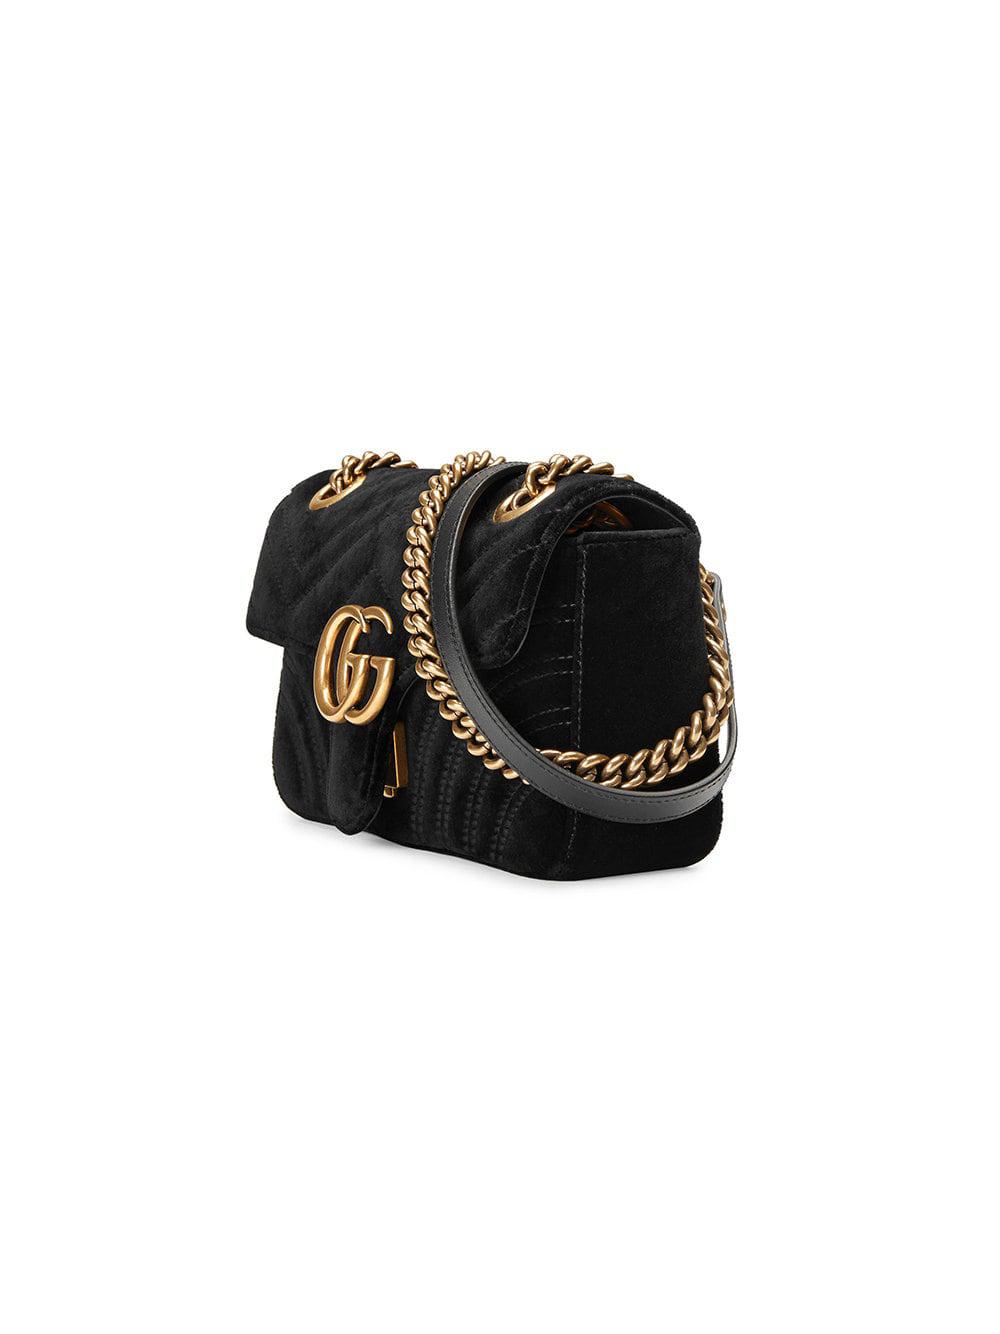 Gucci GG Marmont Velvet Mini Shoulder Bag in Black - Lyst